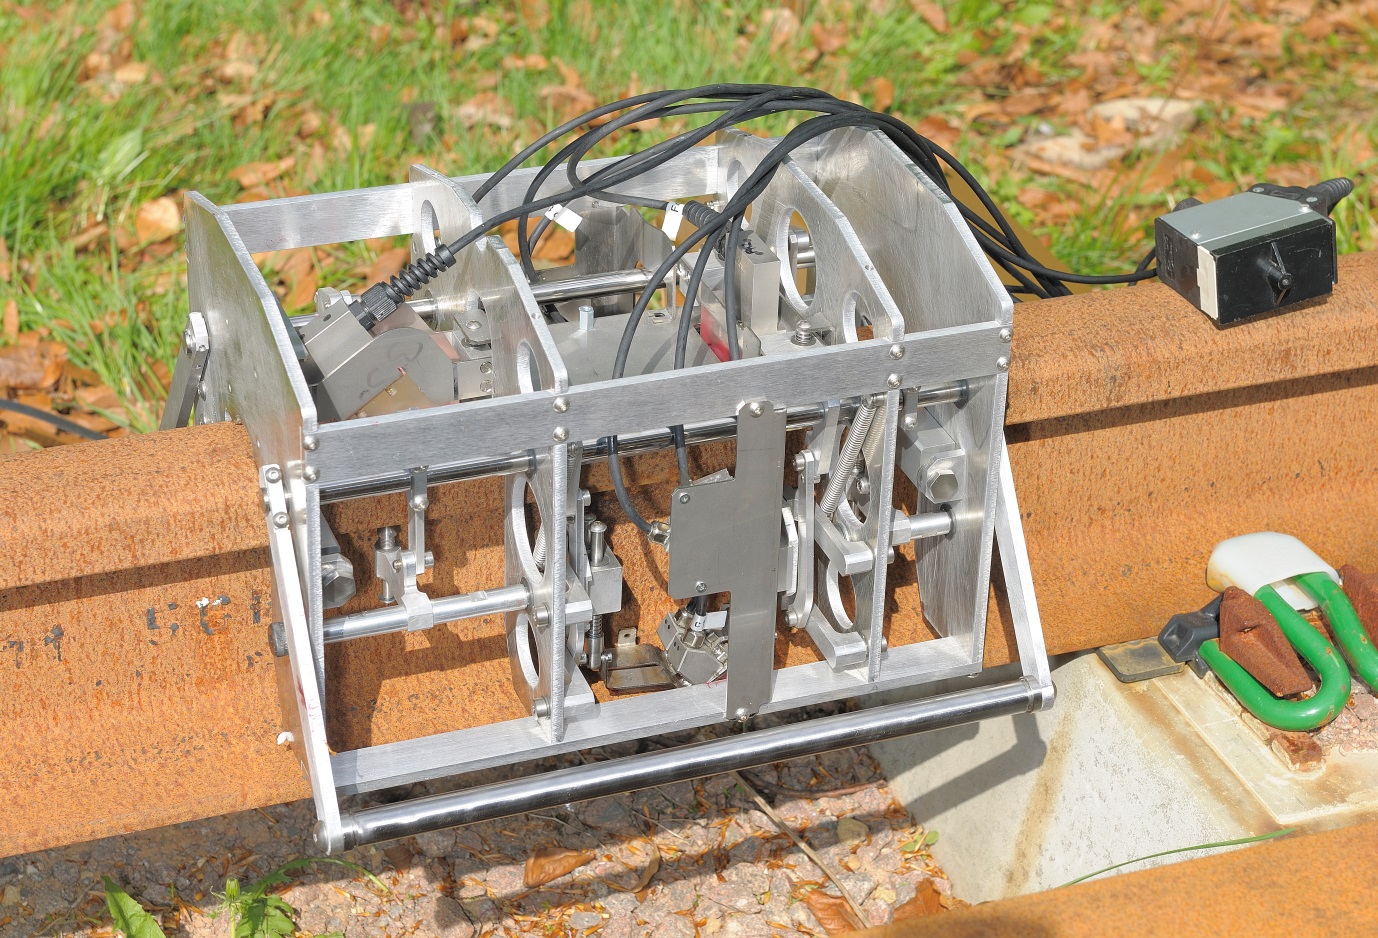 Second generation prototype of Railect